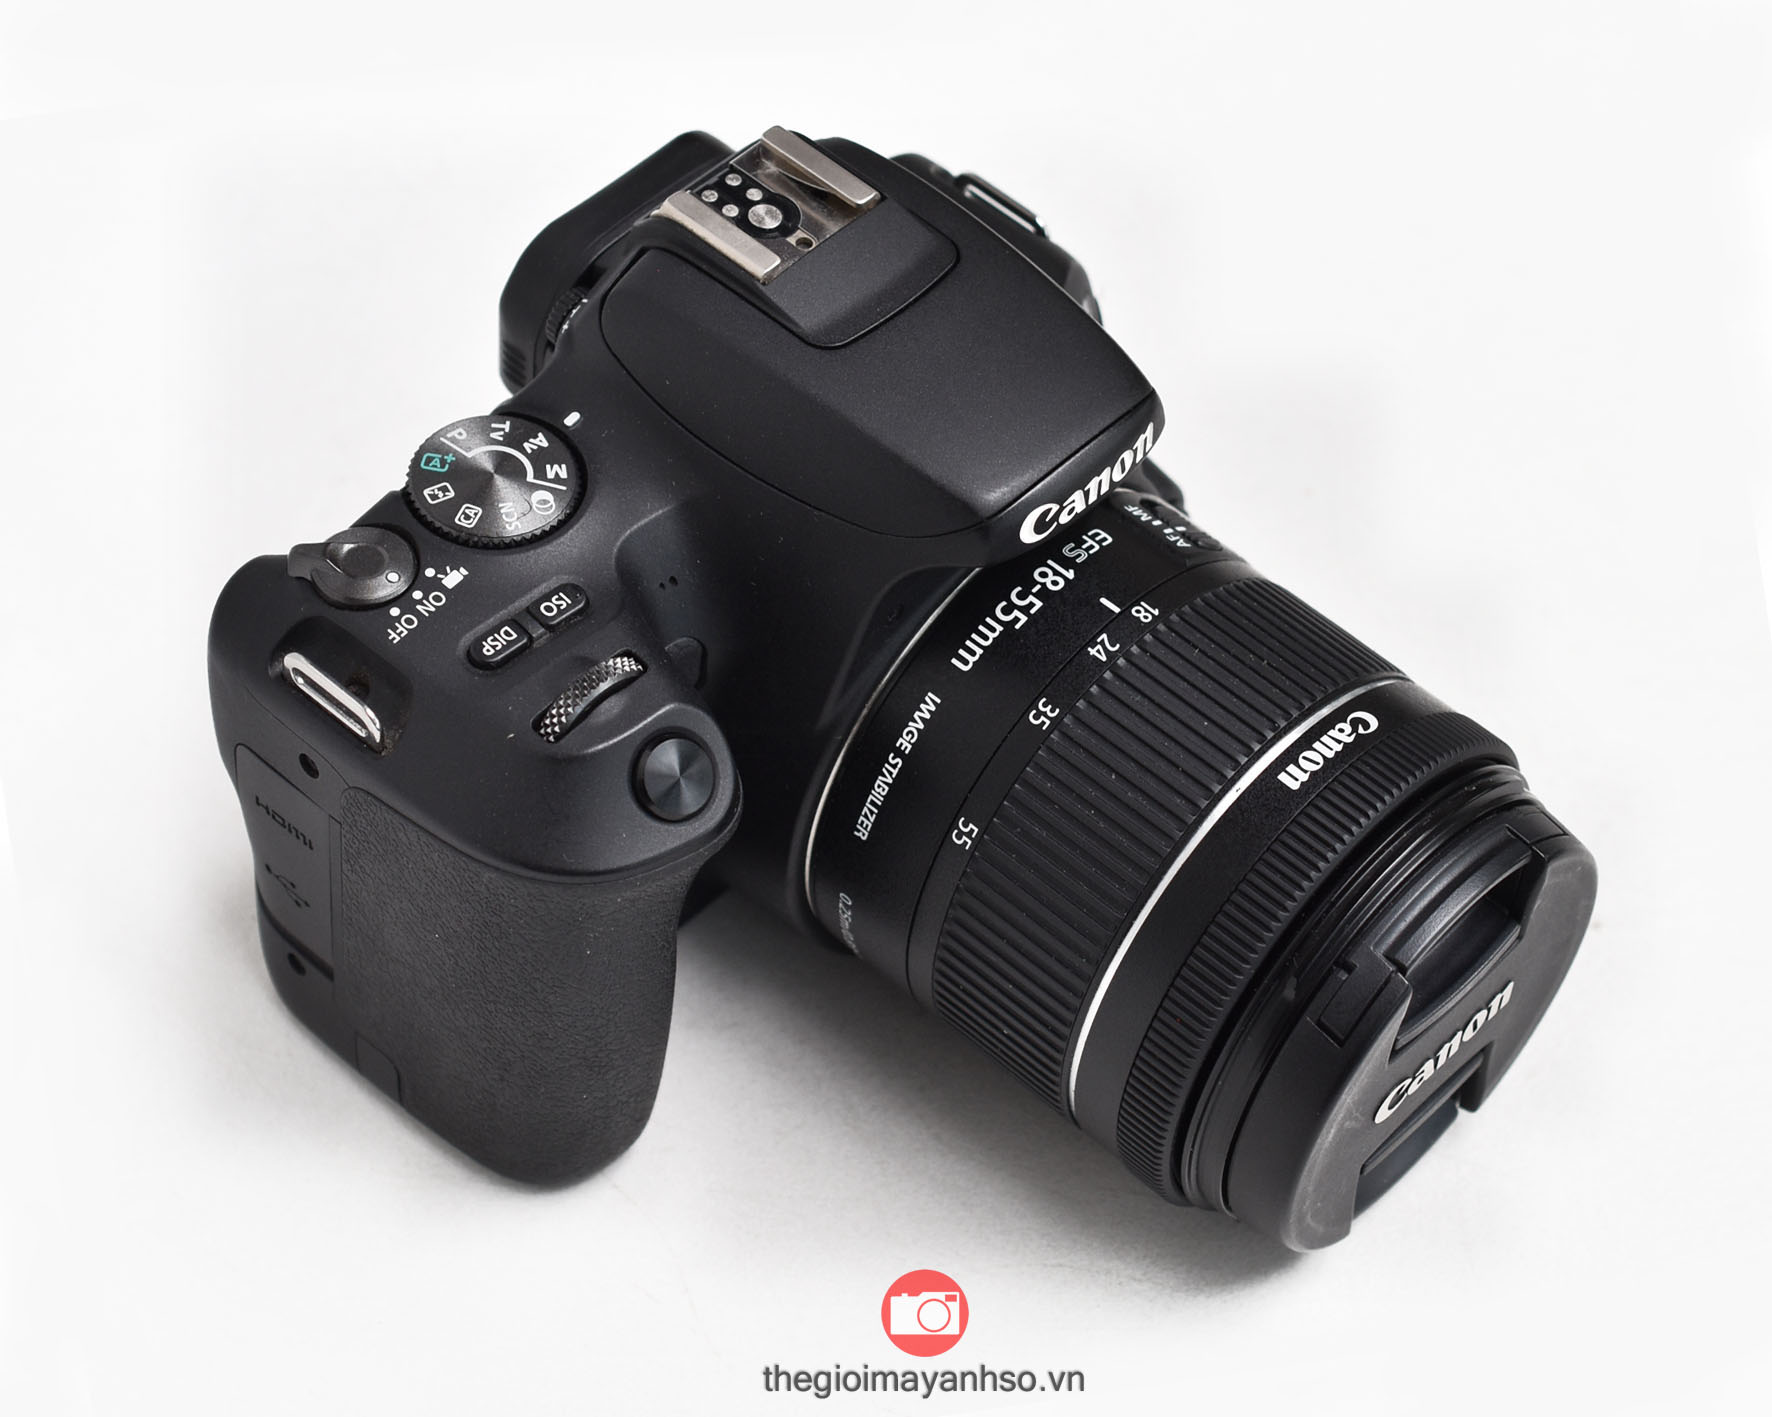 Canon EOS 200D / Kiss X9 kit 18-55mm f4-5.6 STM